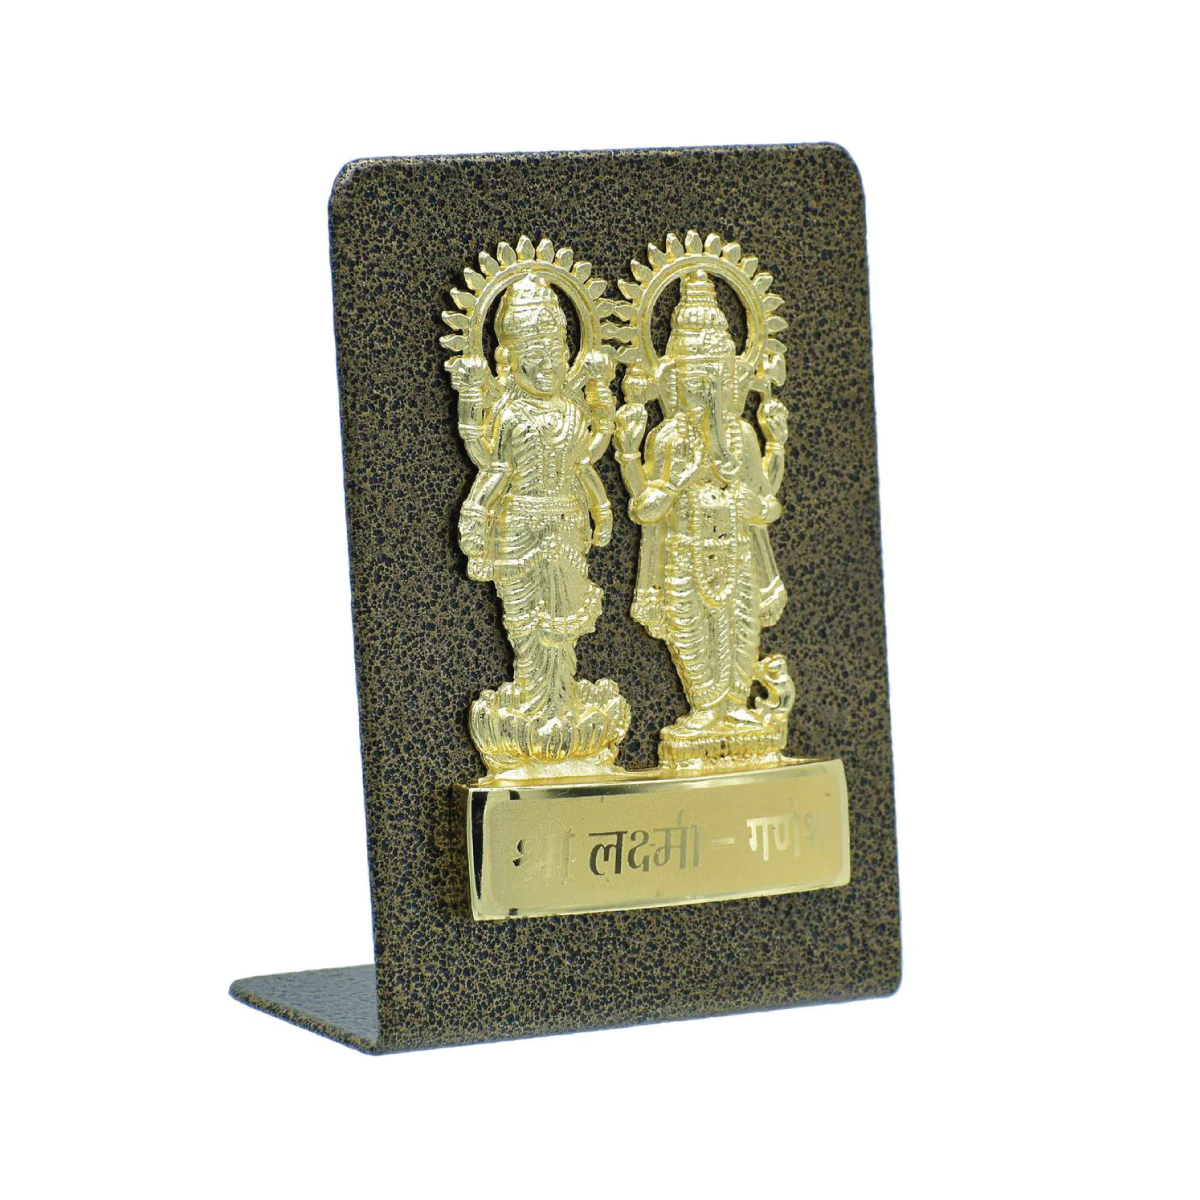 Desktop Gold Shri Laxmi Ji and Ganesh Ji Plate - For Corporate Gifting, Diwali Gifting for Employees, Dealers, Stakeholders, Customers JATT660GBK